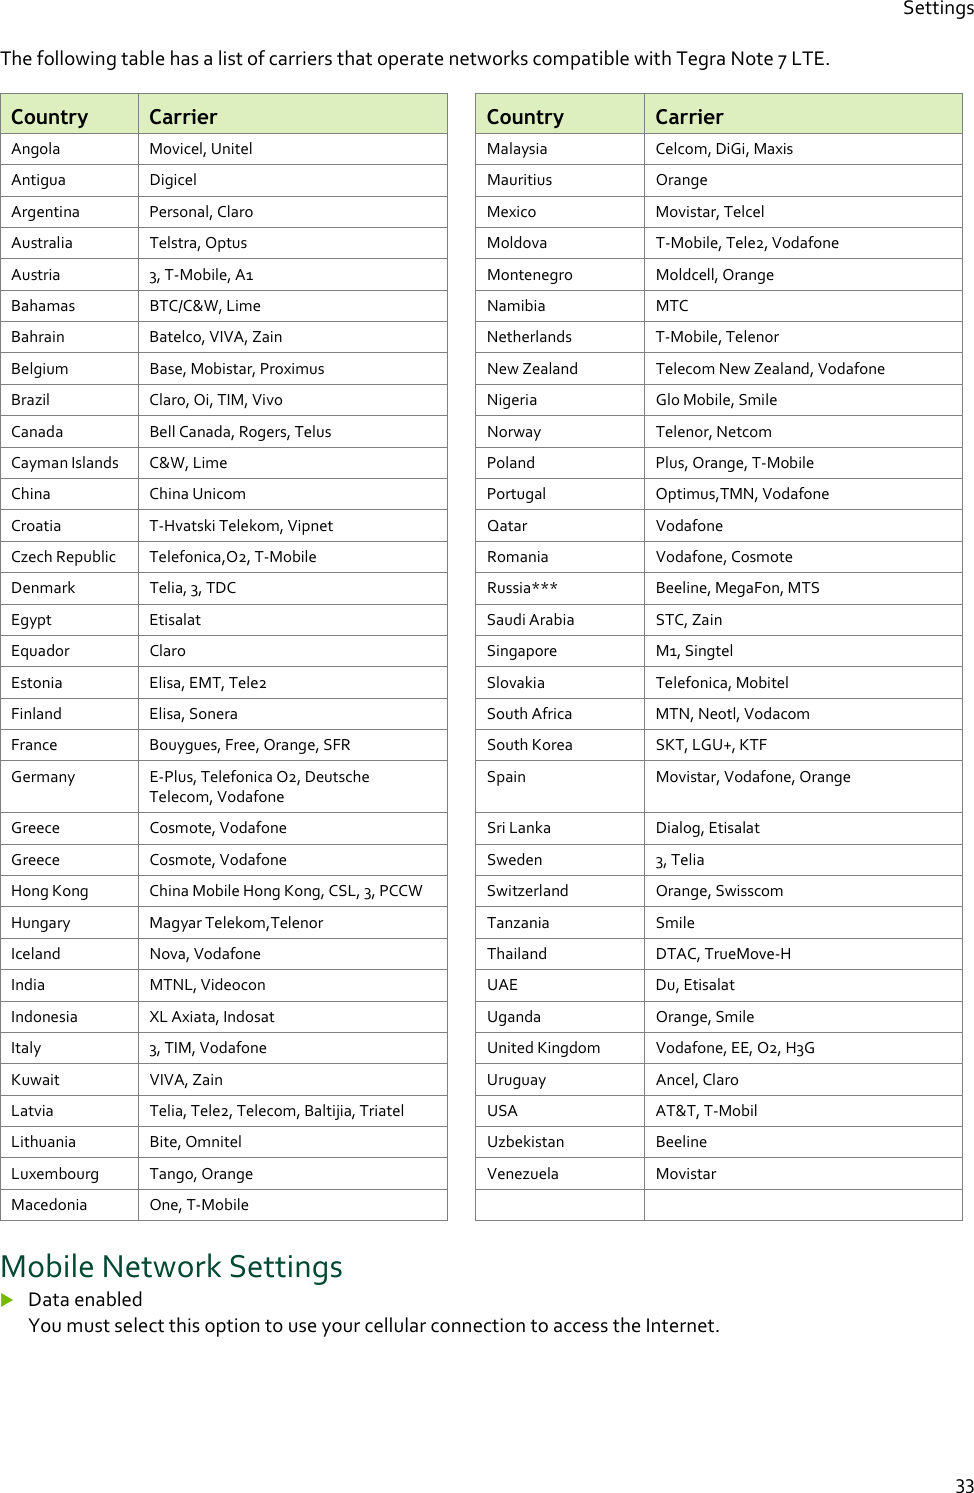 Settings  33 The following table has a list of carriers that operate networks compatible with Tegra Note 7 LTE.  Country  Carrier    Country  Carrier Angola  Movicel, Unitel    Malaysia  Celcom, DiGi, Maxis Antigua  Digicel    Mauritius  Orange Argentina  Personal, Claro    Mexico  Movistar, Telcel Australia  Telstra, Optus    Moldova  T-Mobile, Tele2, Vodafone Austria  3, T-Mobile, A1    Montenegro  Moldcell, Orange Bahamas  BTC/C&amp;W, Lime    Namibia  MTC Bahrain   Batelco, VIVA, Zain    Netherlands  T-Mobile, Telenor Belgium  Base, Mobistar, Proximus    New Zealand   Telecom New Zealand, Vodafone Brazil  Claro, Oi, TIM, Vivo    Nigeria  Glo Mobile, Smile Canada  Bell Canada, Rogers, Telus    Norway  Telenor, Netcom Cayman Islands  C&amp;W, Lime    Poland  Plus, Orange, T-Mobile China  China Unicom    Portugal  Optimus,TMN, Vodafone Croatia  T-Hvatski Telekom, Vipnet    Qatar  Vodafone Czech Republic  Telefonica,O2, T-Mobile    Romania  Vodafone, Cosmote Denmark  Telia, 3, TDC    Russia***  Beeline, MegaFon, MTS Egypt  Etisalat    Saudi Arabia  STC, Zain Equador  Claro    Singapore  M1, Singtel Estonia  Elisa, EMT, Tele2    Slovakia  Telefonica, Mobitel Finland  Elisa, Sonera    South Africa  MTN, Neotl, Vodacom France  Bouygues, Free, Orange, SFR    South Korea   SKT, LGU+, KTF Germany  E-Plus, Telefonica O2, Deutsche Telecom, Vodafone   Spain  Movistar, Vodafone, Orange Greece  Cosmote, Vodafone    Sri Lanka   Dialog, Etisalat Greece  Cosmote, Vodafone    Sweden  3, Telia Hong Kong  China Mobile Hong Kong, CSL, 3, PCCW    Switzerland  Orange, Swisscom Hungary  Magyar Telekom,Telenor    Tanzania  Smile Iceland  Nova, Vodafone    Thailand  DTAC, TrueMove-H India  MTNL, Videocon    UAE  Du, Etisalat Indonesia  XL Axiata, Indosat    Uganda  Orange, Smile Italy  3, TIM, Vodafone    United Kingdom  Vodafone, EE, O2, H3G Kuwait  VIVA, Zain    Uruguay  Ancel, Claro Latvia  Telia, Tele2, Telecom, Baltijia, Triatel    USA  AT&amp;T, T-Mobil Lithuania  Bite, Omnitel    Uzbekistan  Beeline Luxembourg  Tango, Orange    Venezuela  Movistar Macedonia  One, T-Mobile       Mobile Network Settings  Data enabled You must select this option to use your cellular connection to access the Internet. 